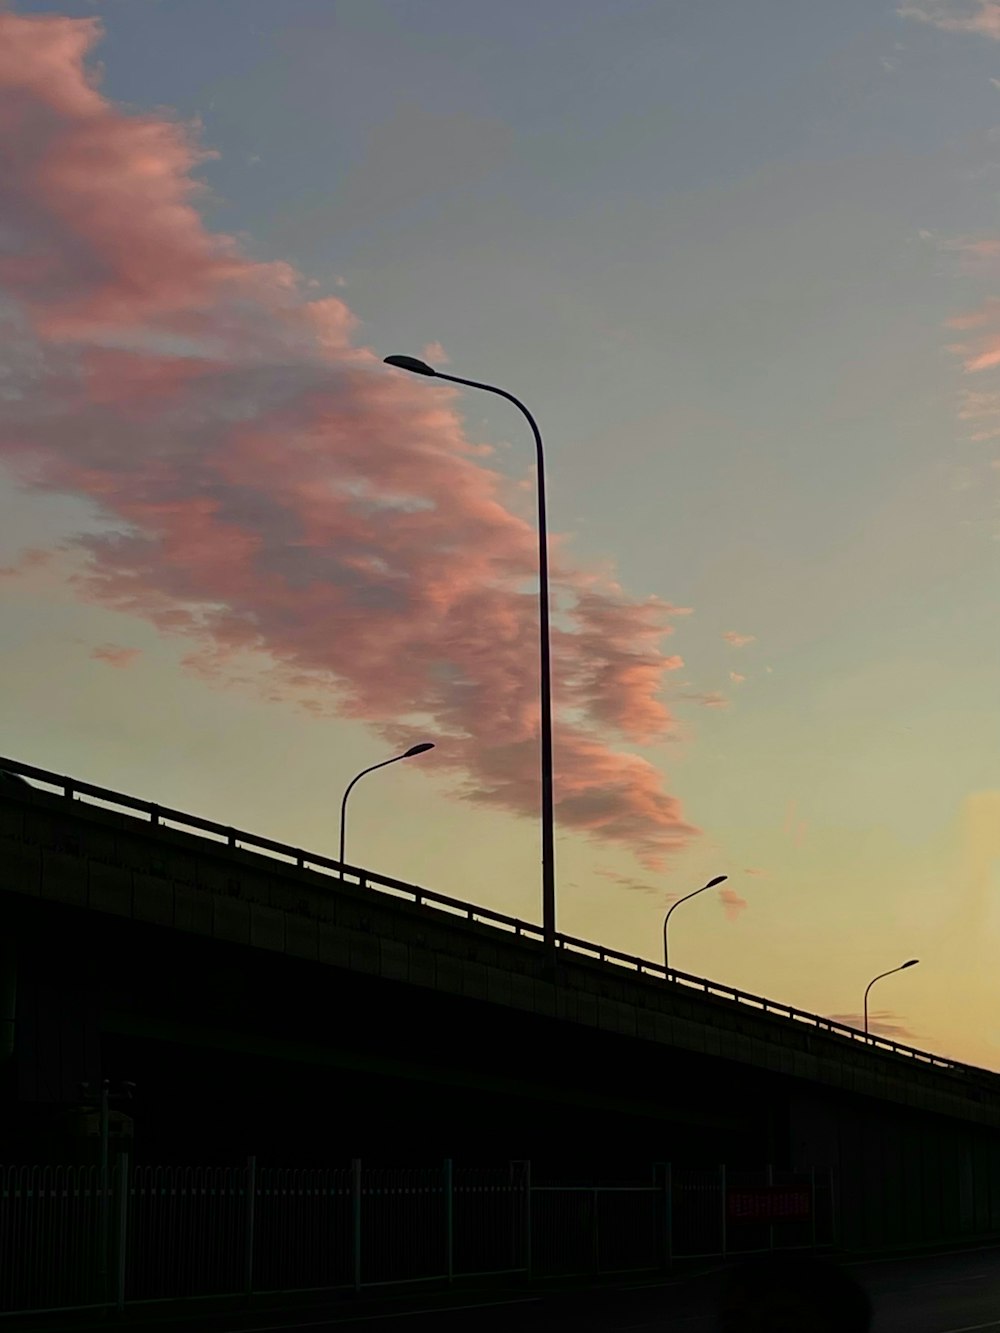 a street light on a bridge with a sky background